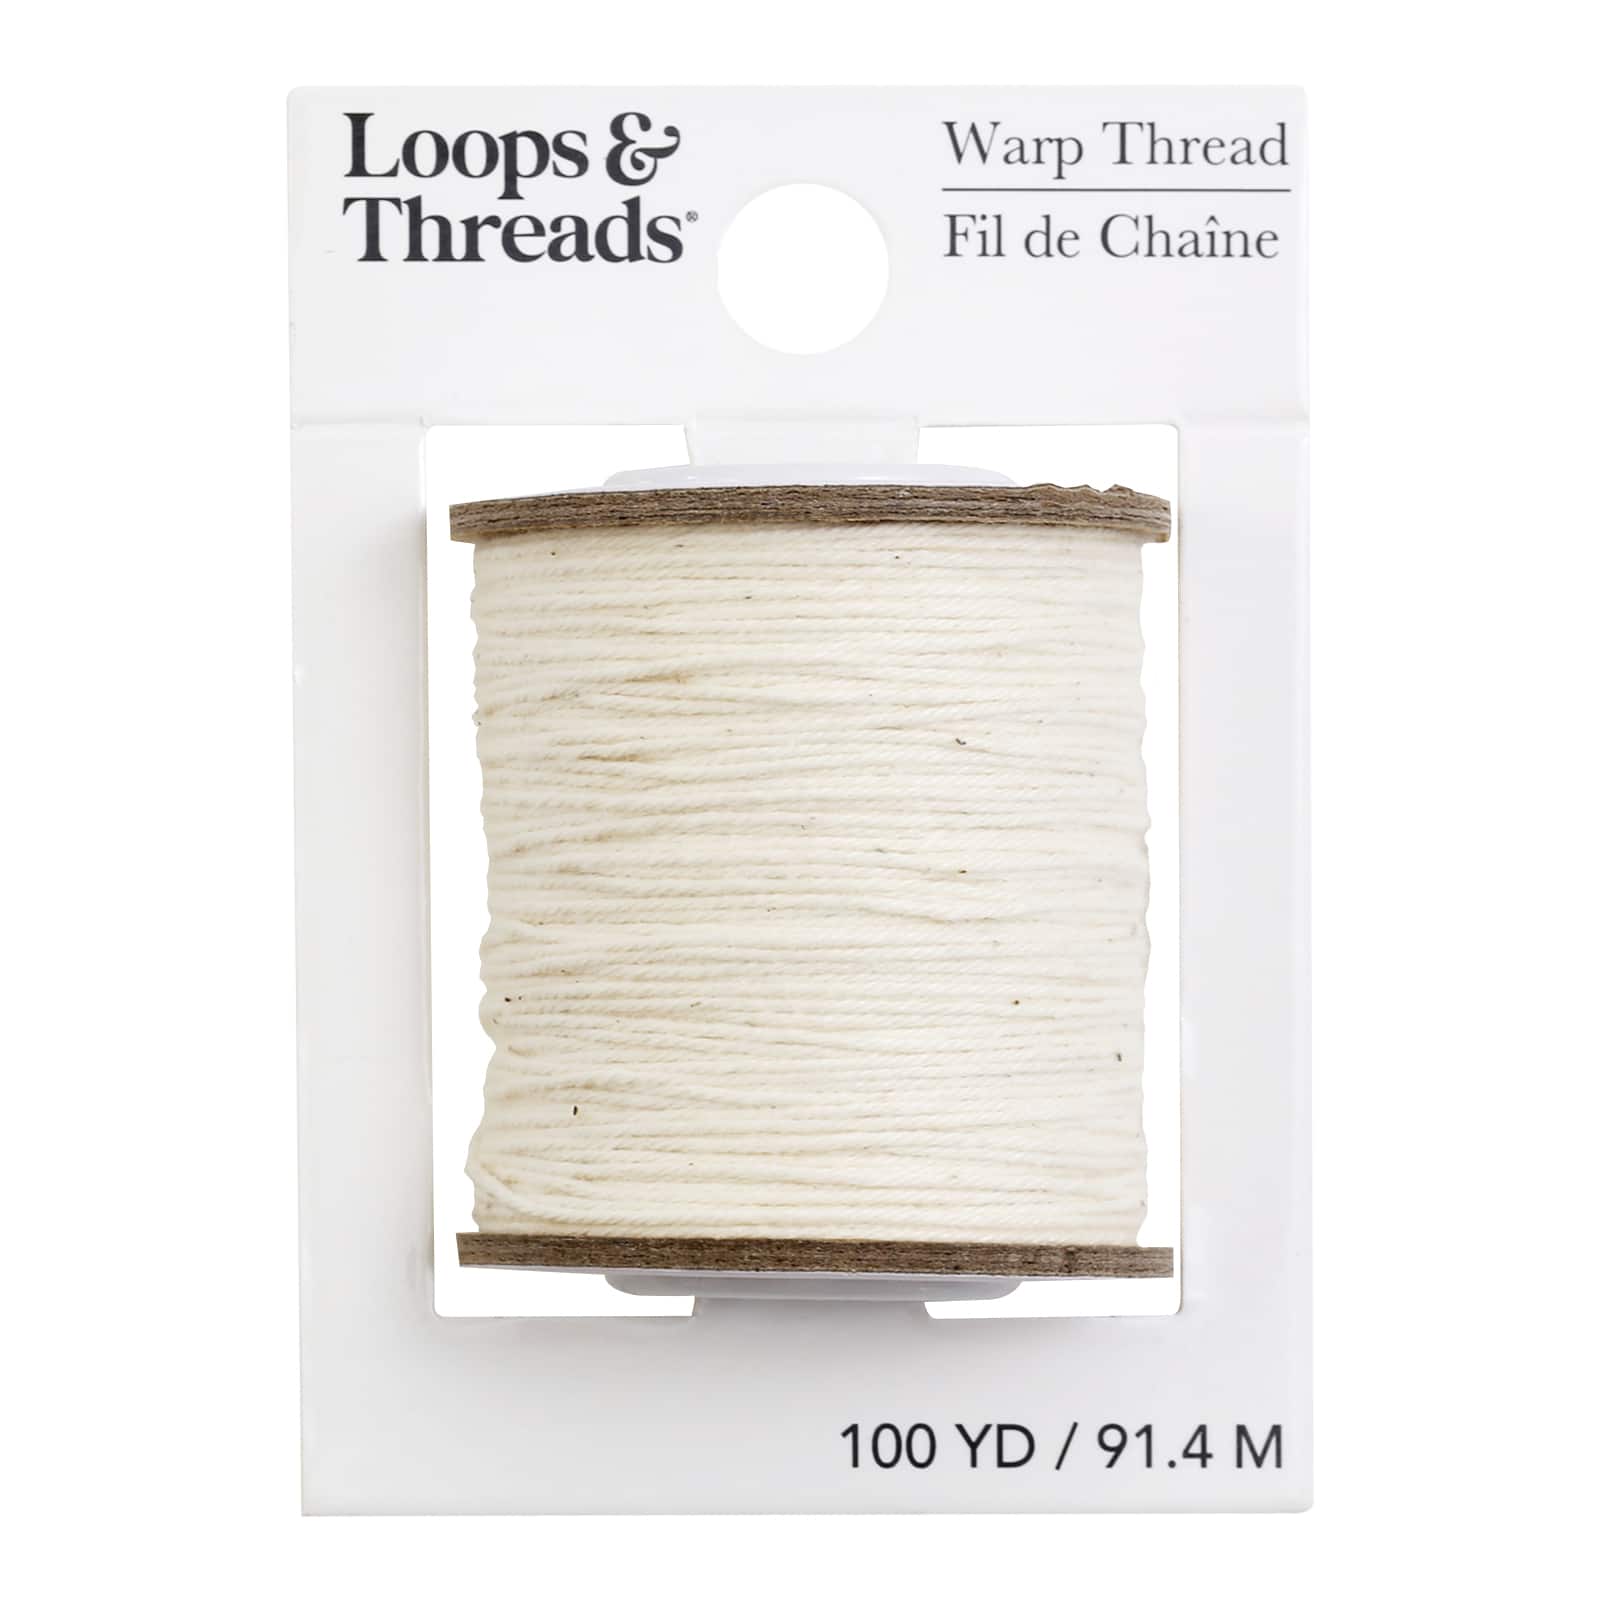 Warp Thread by Loops &#x26; Threads&#xAE;